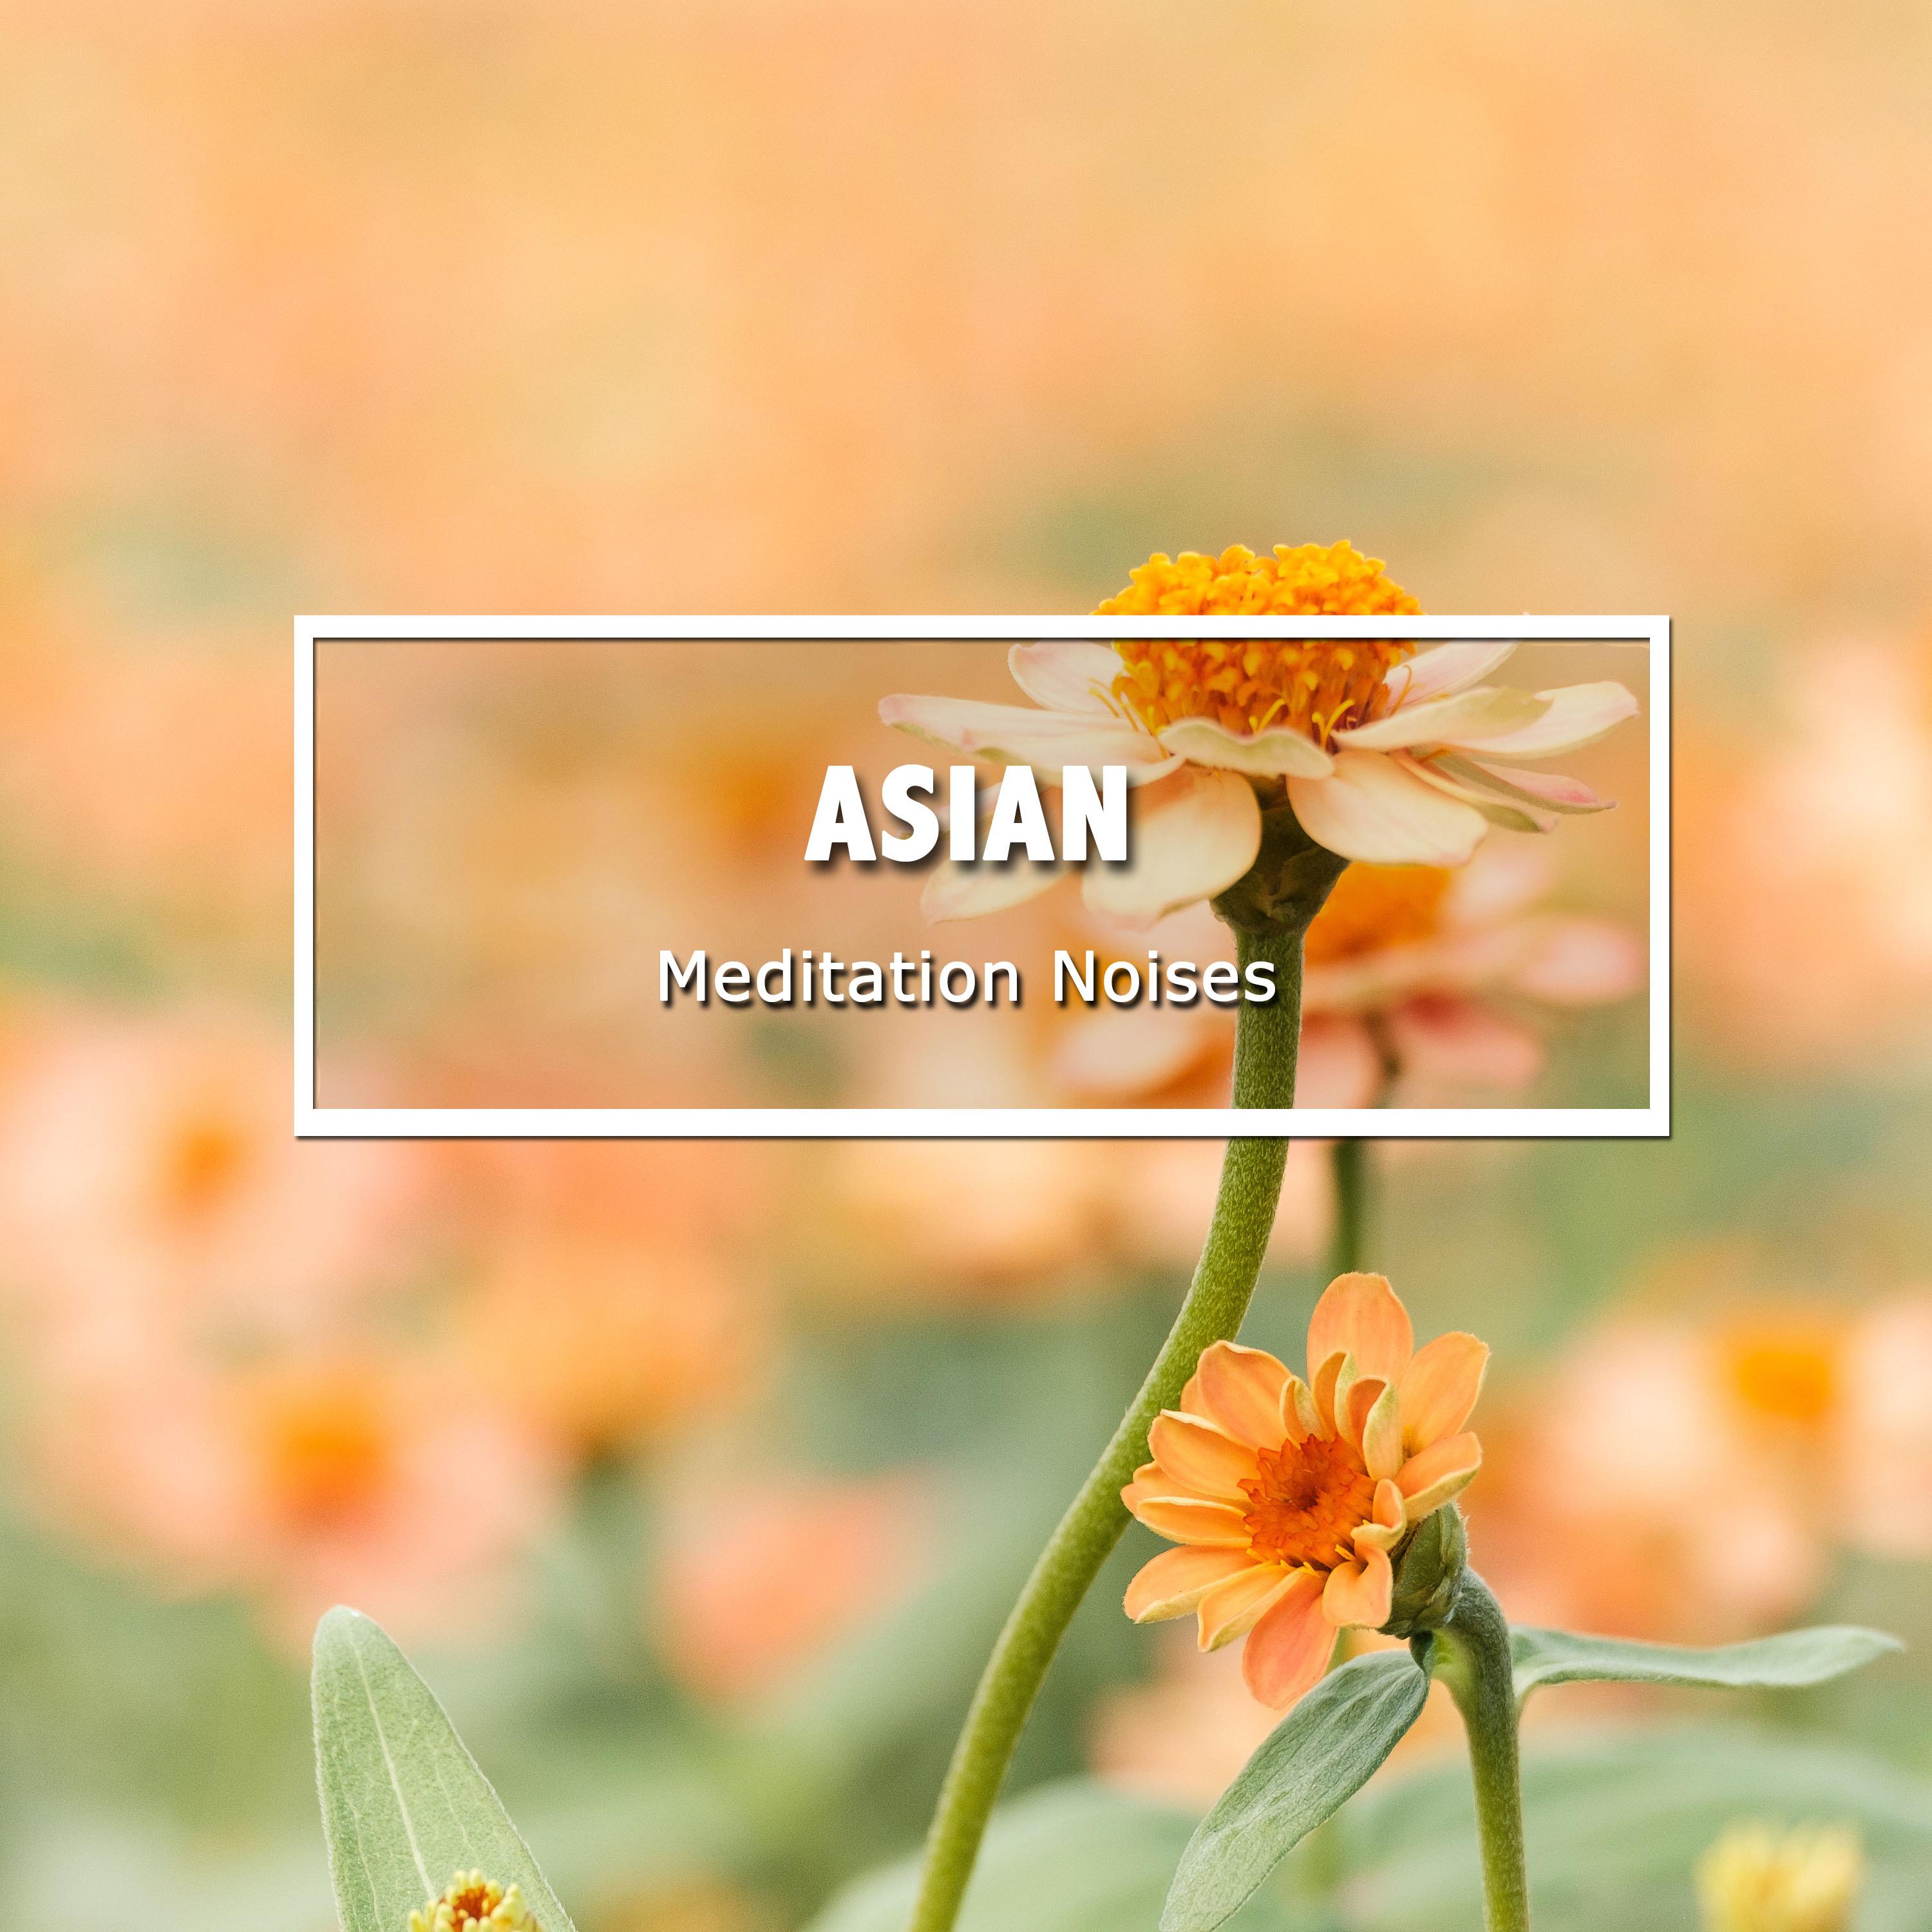 #20 Asian Meditation Noises to Still the Mind